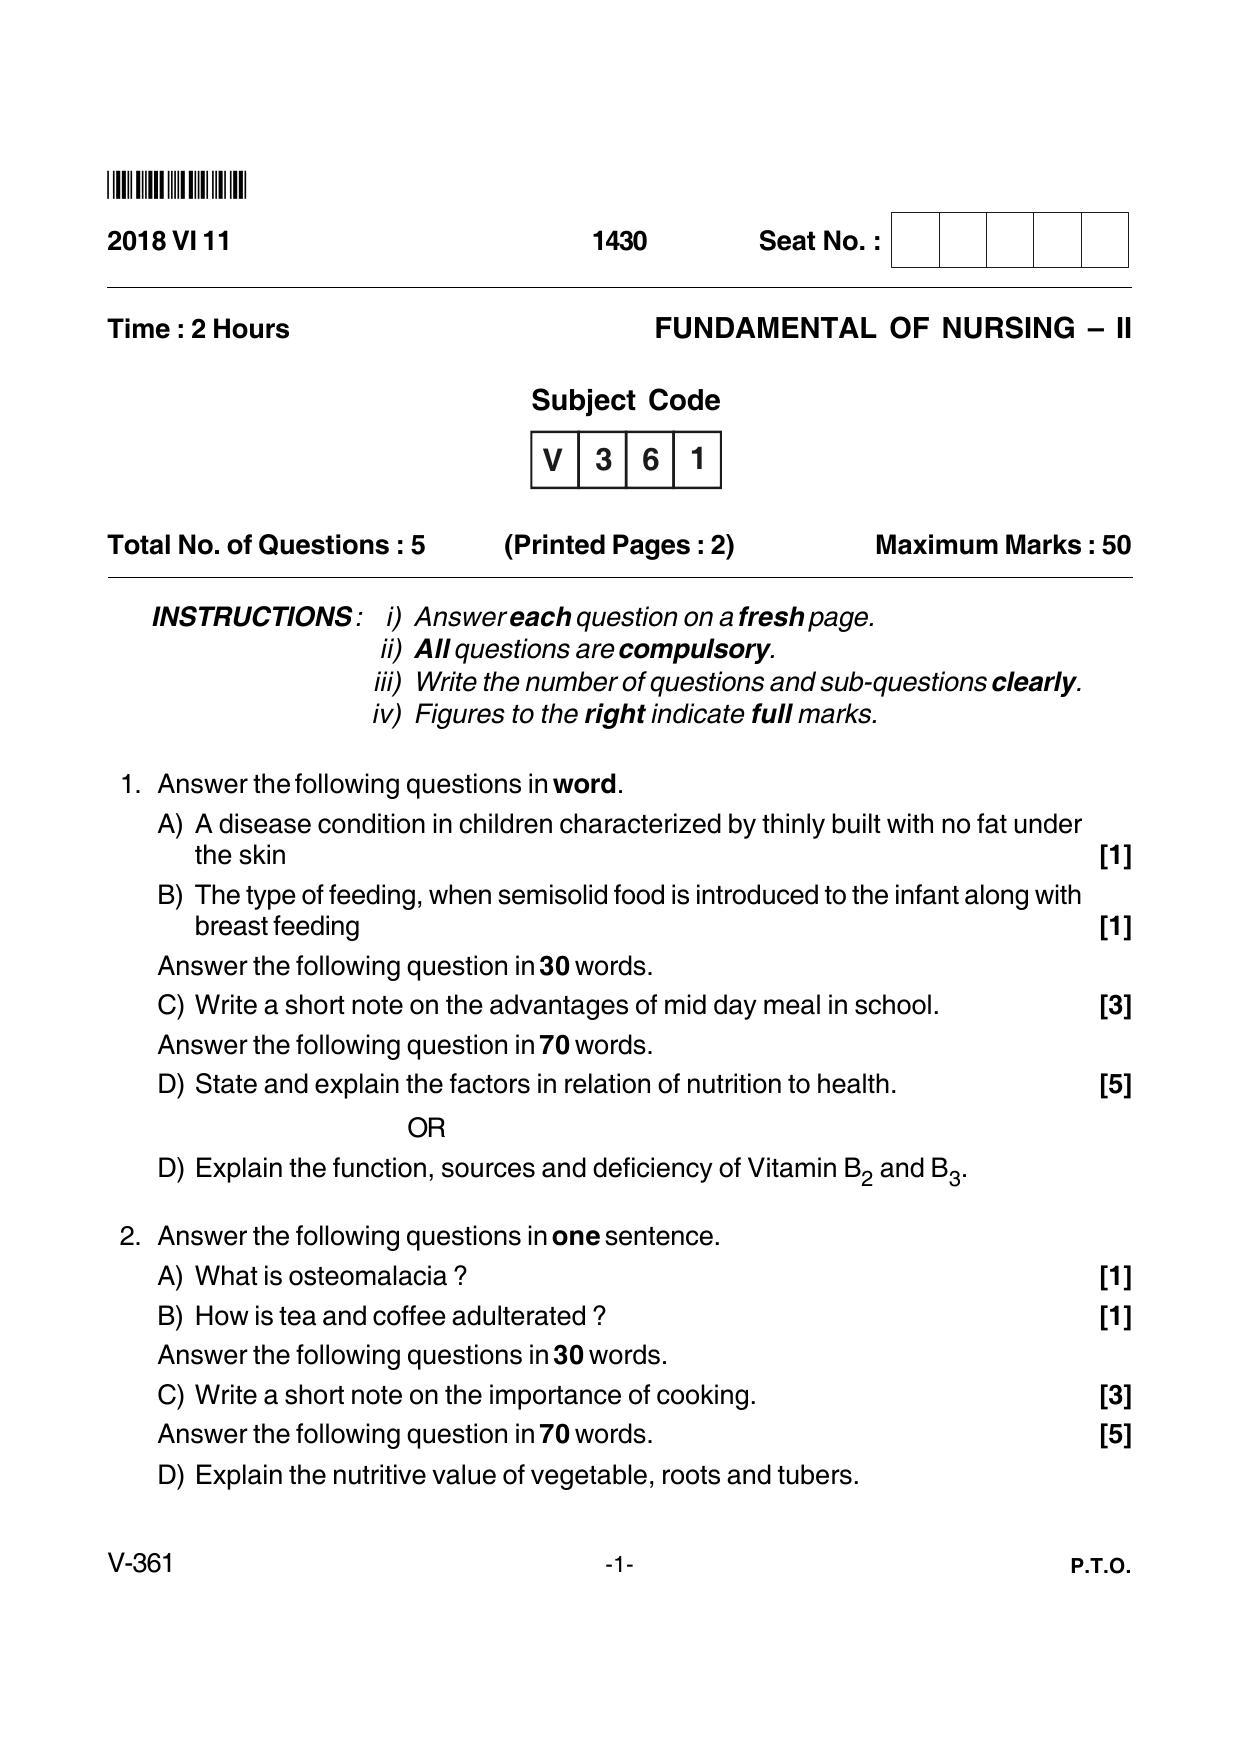 Goa Board Class 12 Fundamentals of Nursing - II  Voc 361 (June 2018) Question Paper - Page 1